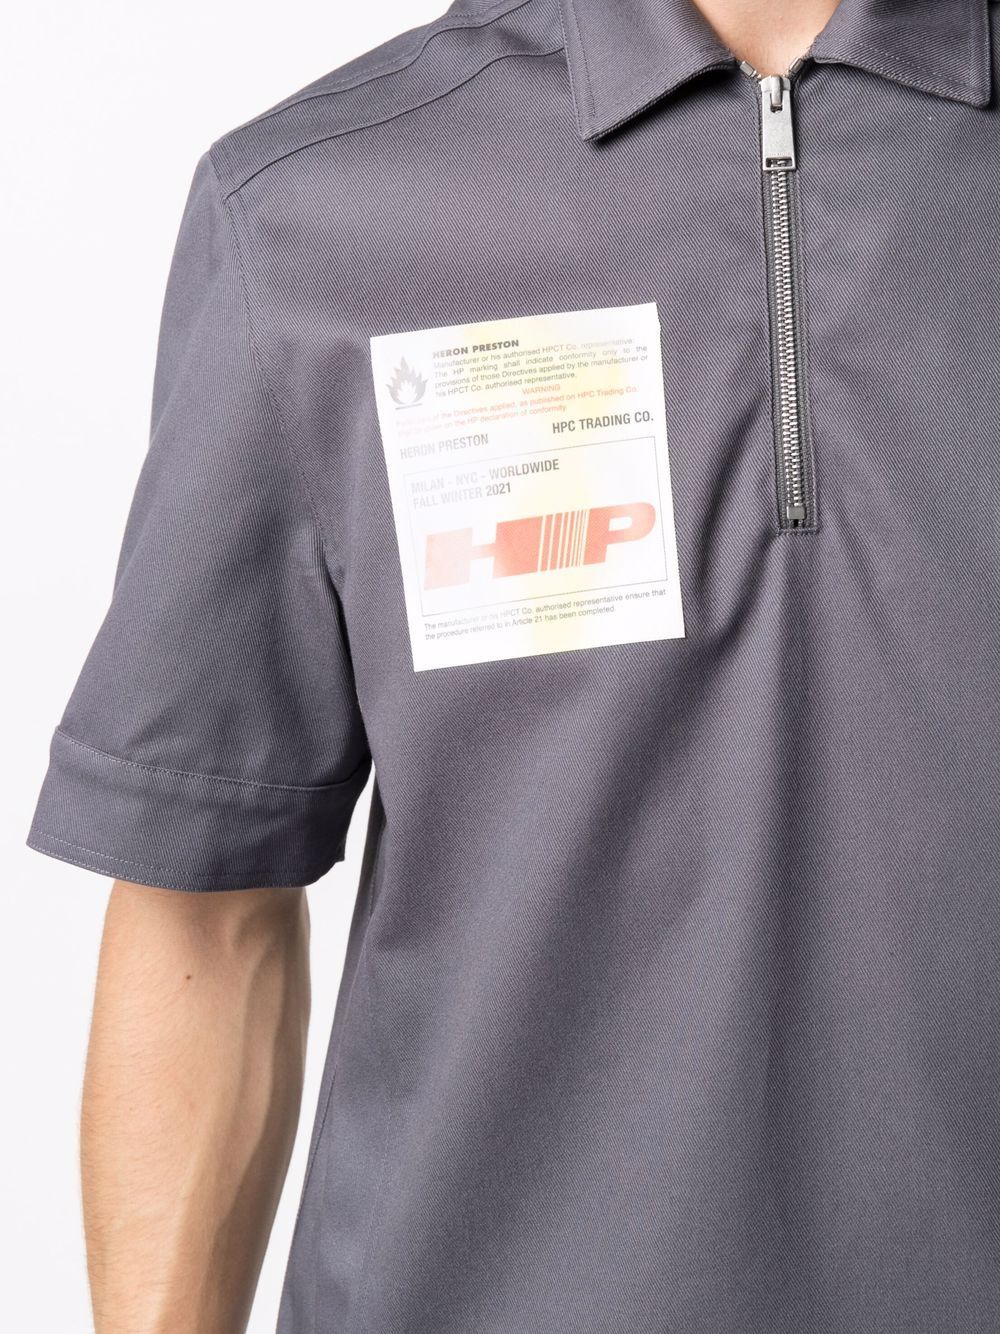 Fire resistant shirt dark grey